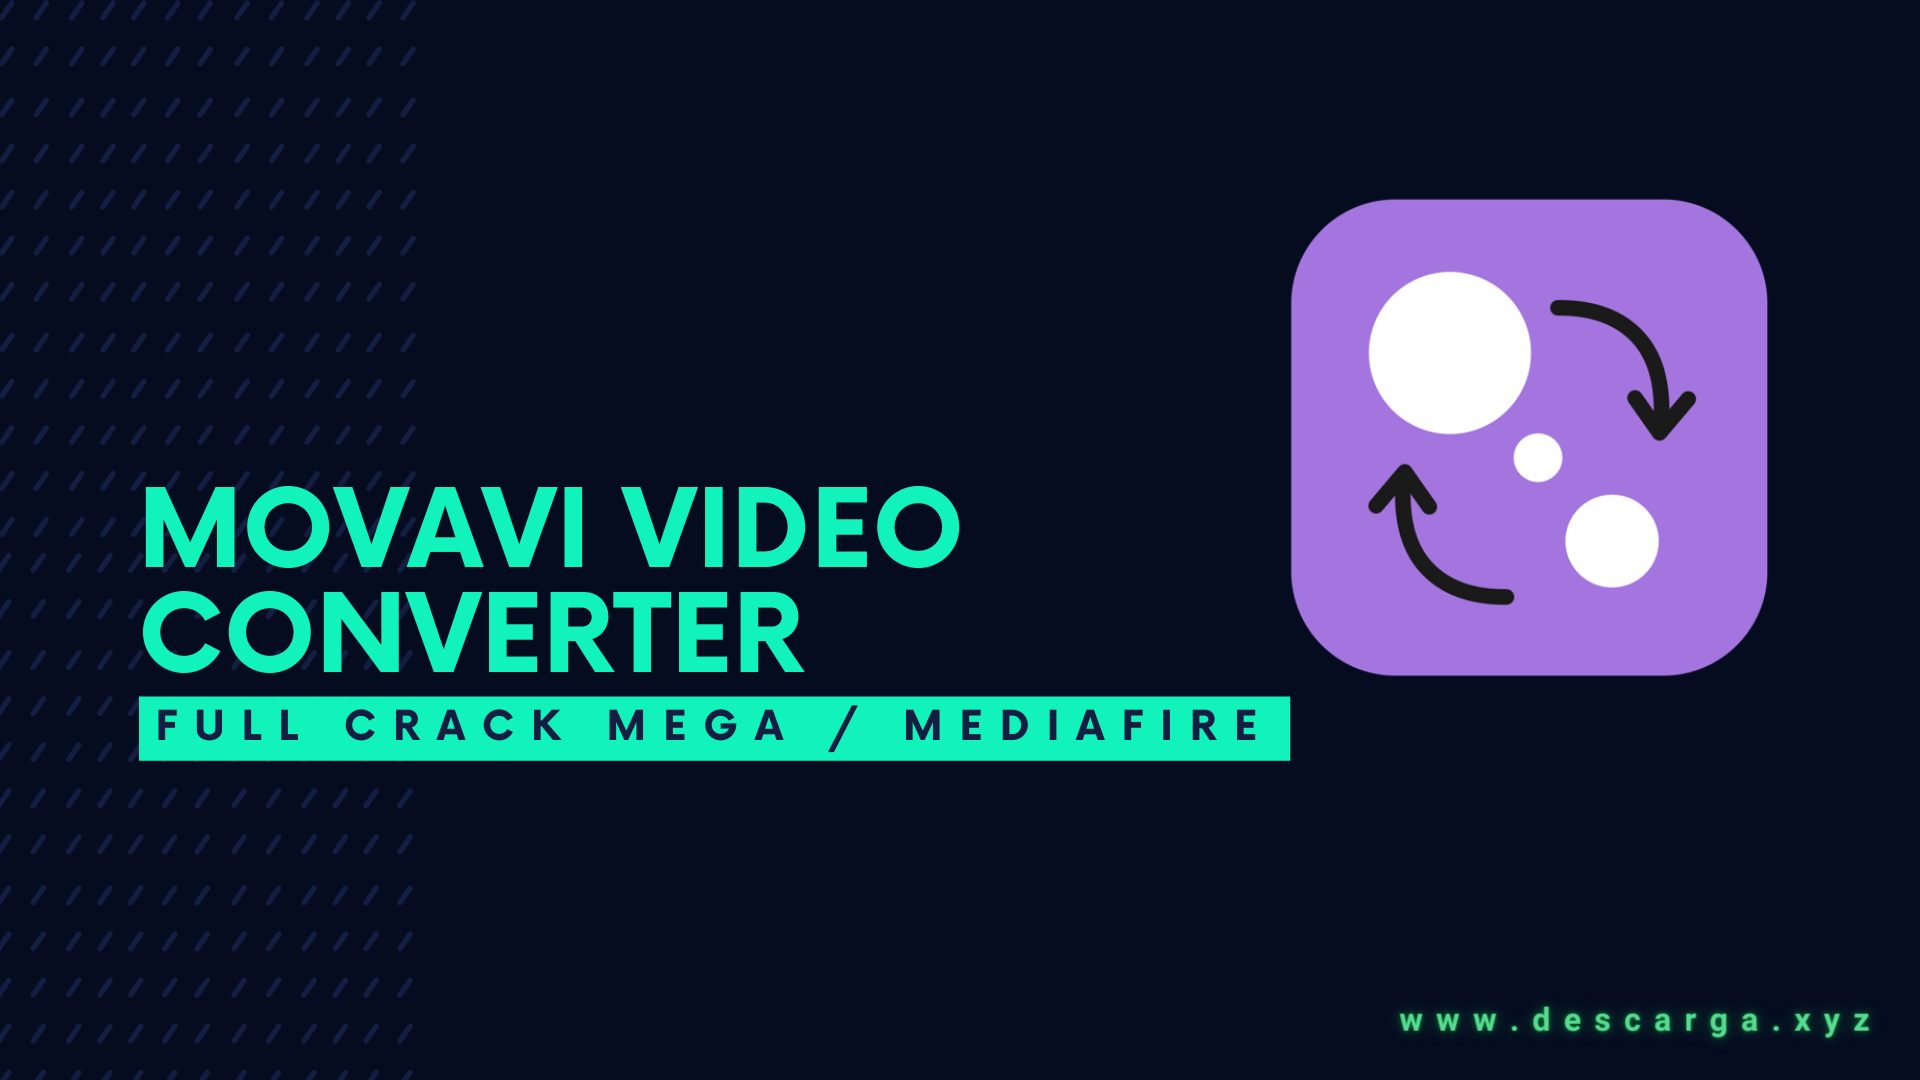 Download 🥇 Movavi Video Converter FULL! v22.5.0 [GRATIS] ✅ MEGA